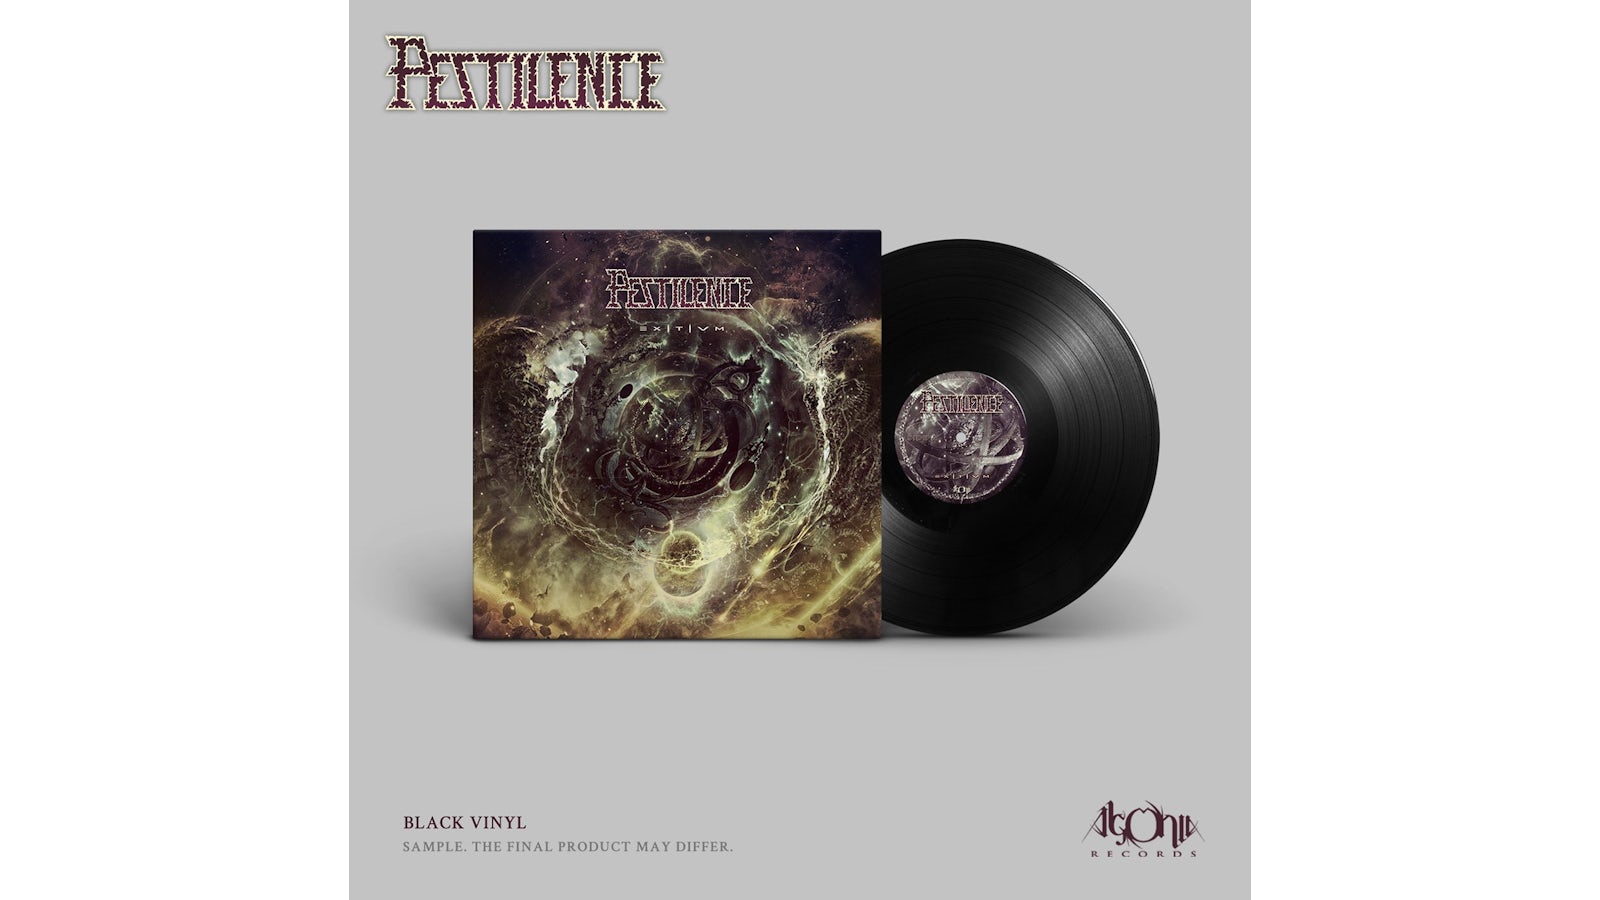 Pestilence "Exitivm" Limited 12"